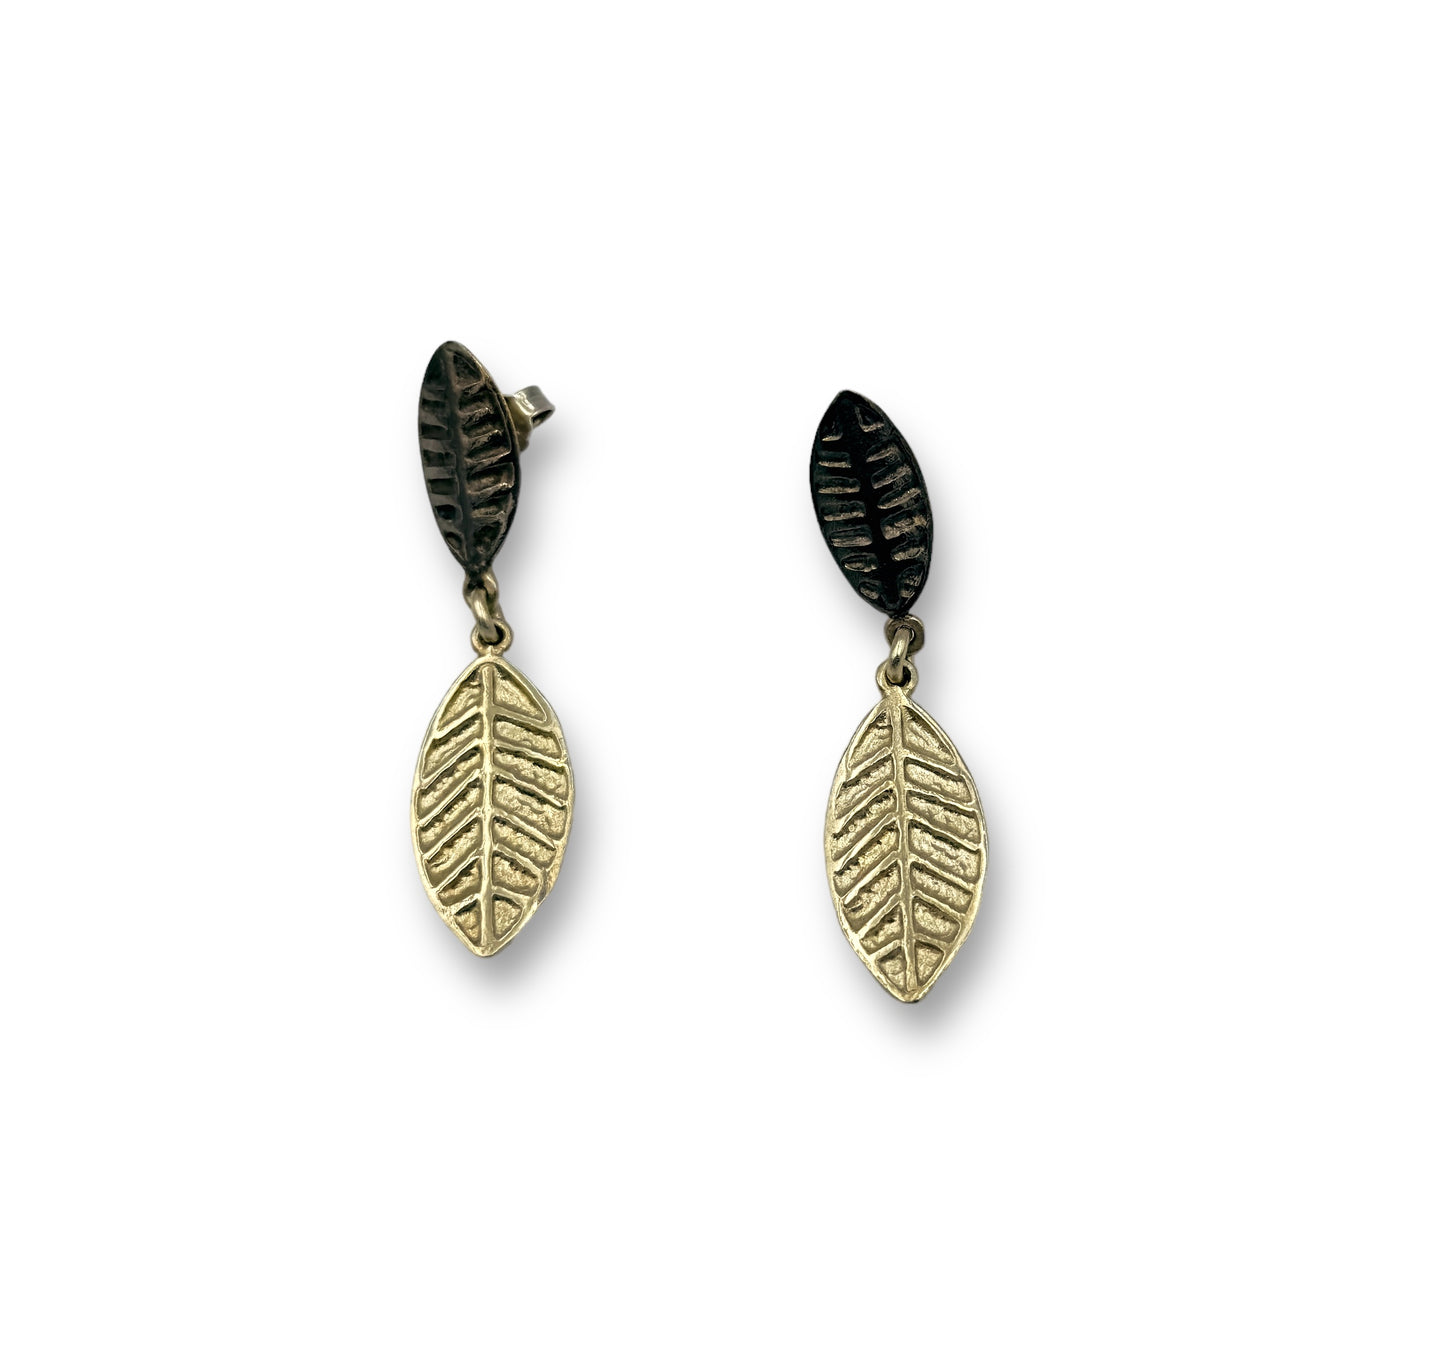 Silver two-toned leaf design earrings